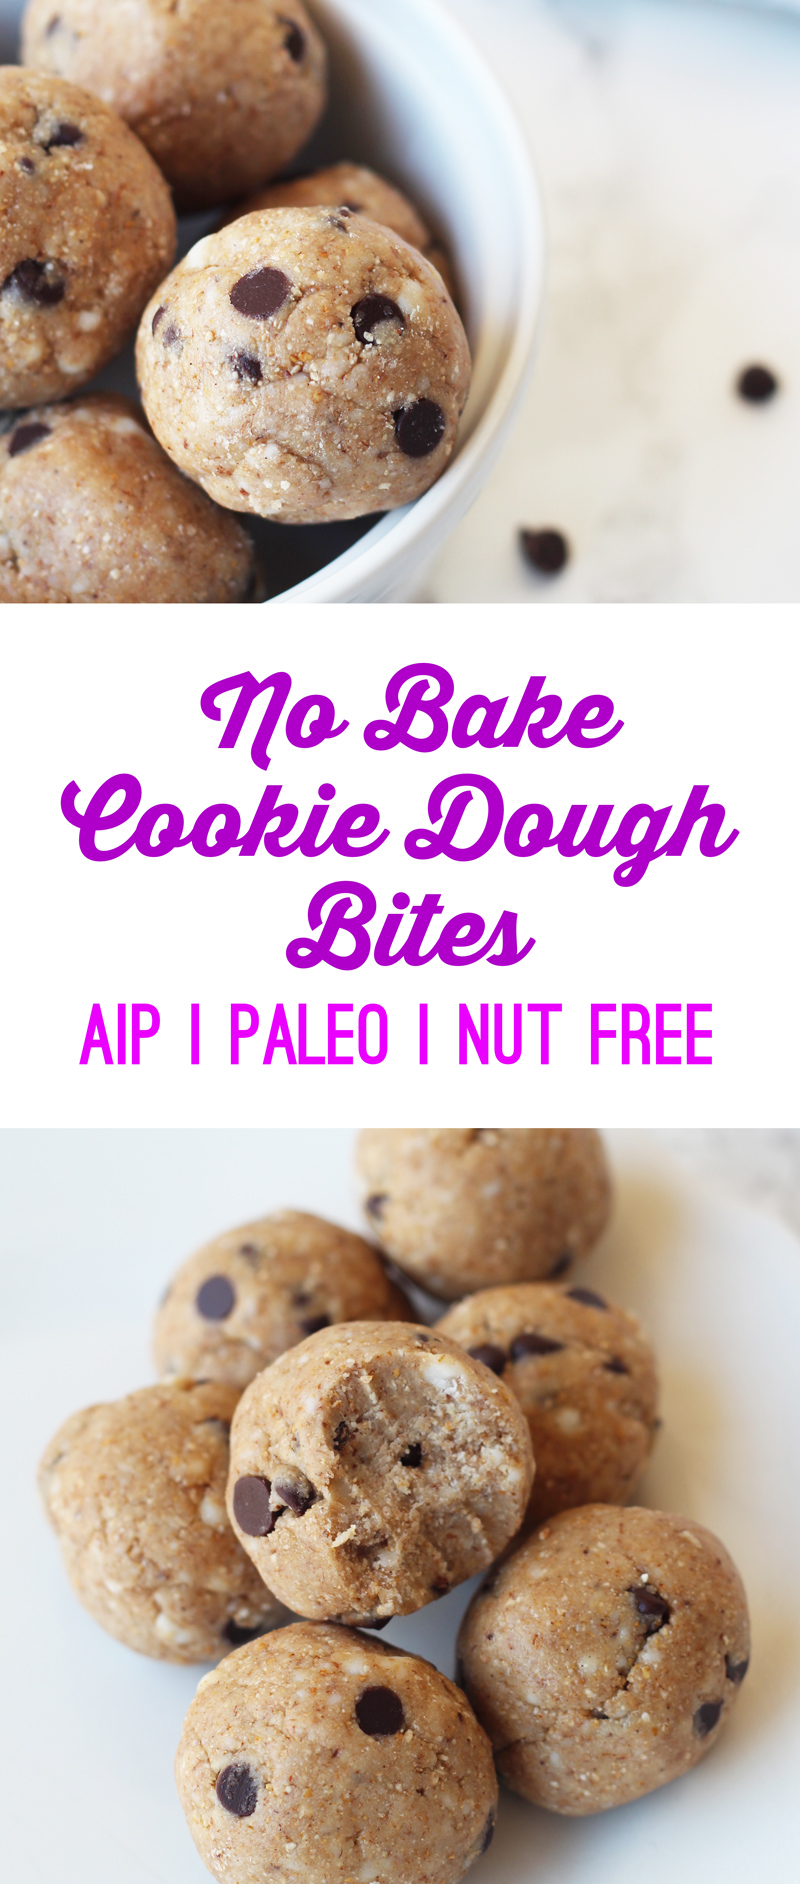 No-Bake Cookie Dough Bites (AIP, Paleo, Nut Free, Gluten Free)